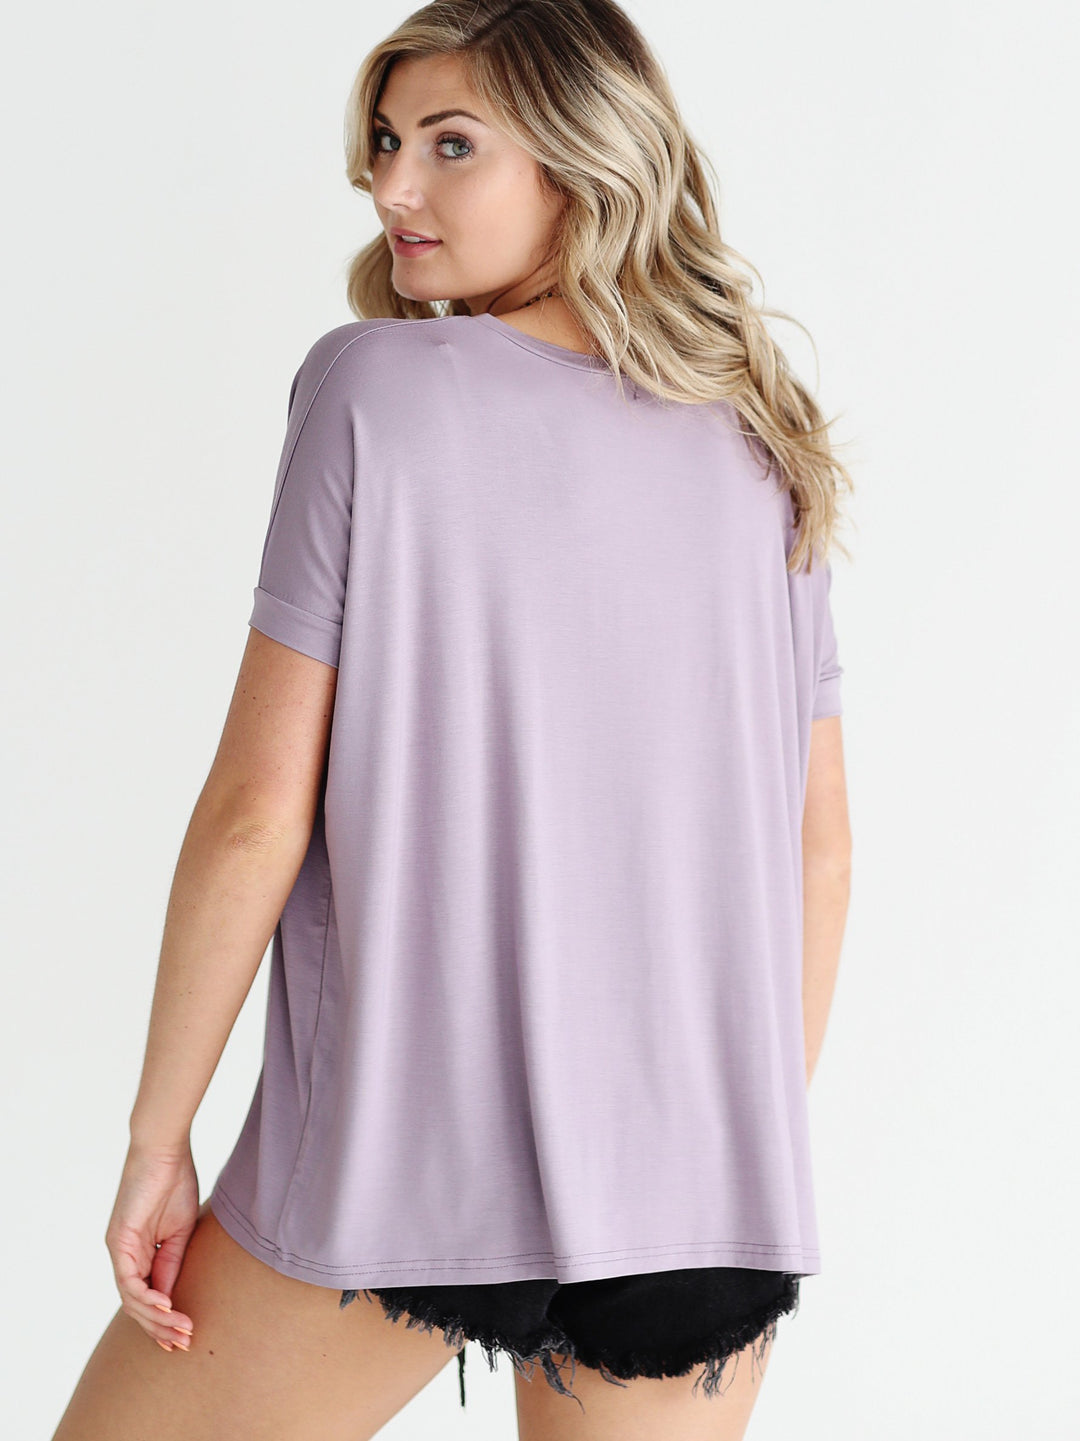 Light Purple V-Neck Short Sleeve Top